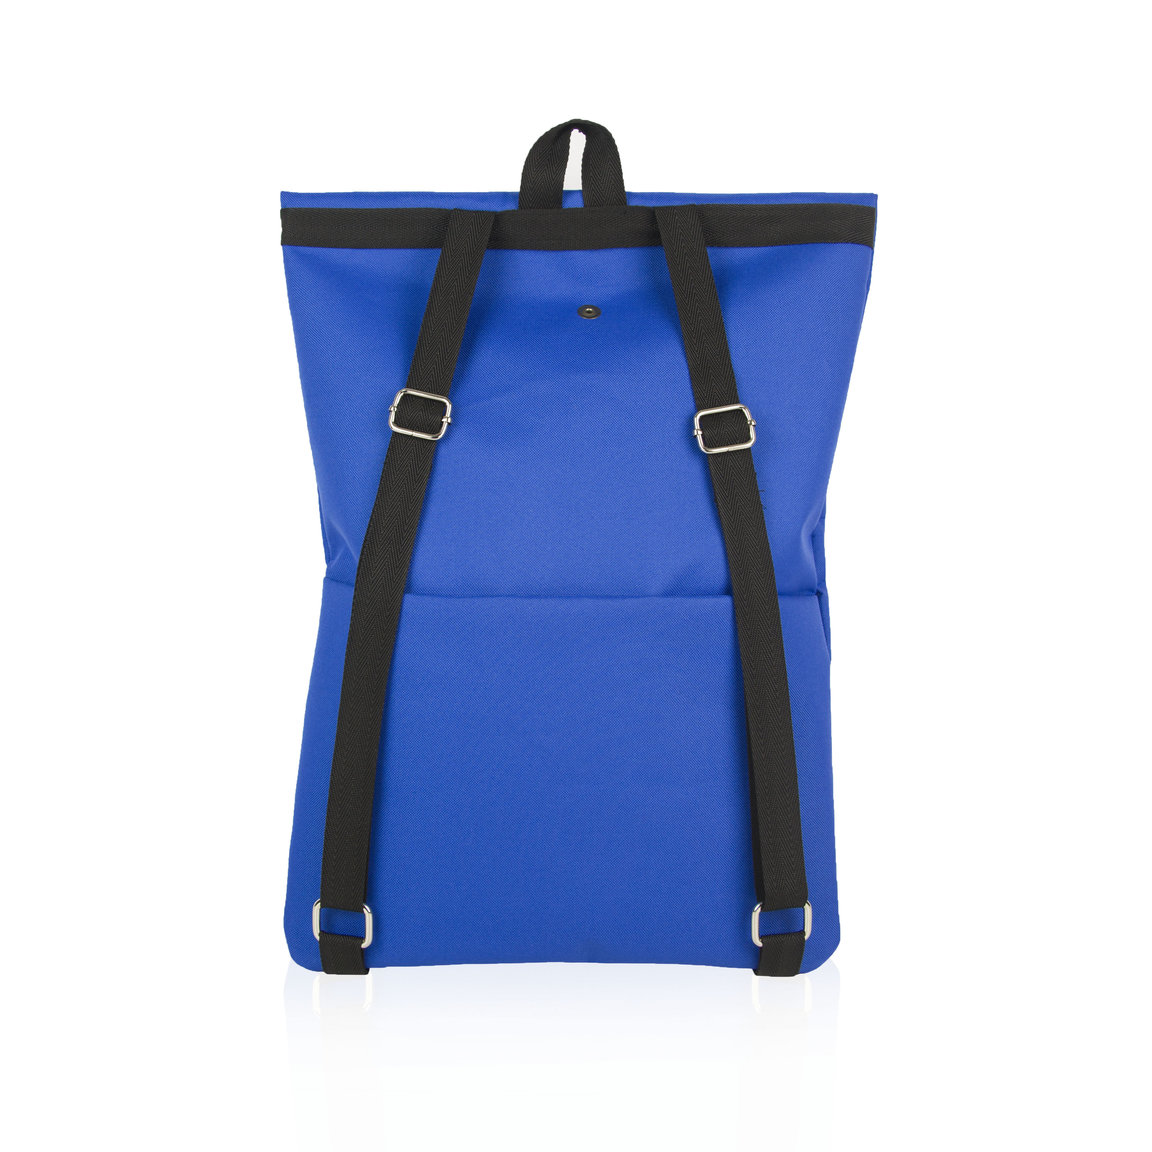 Blue packpack